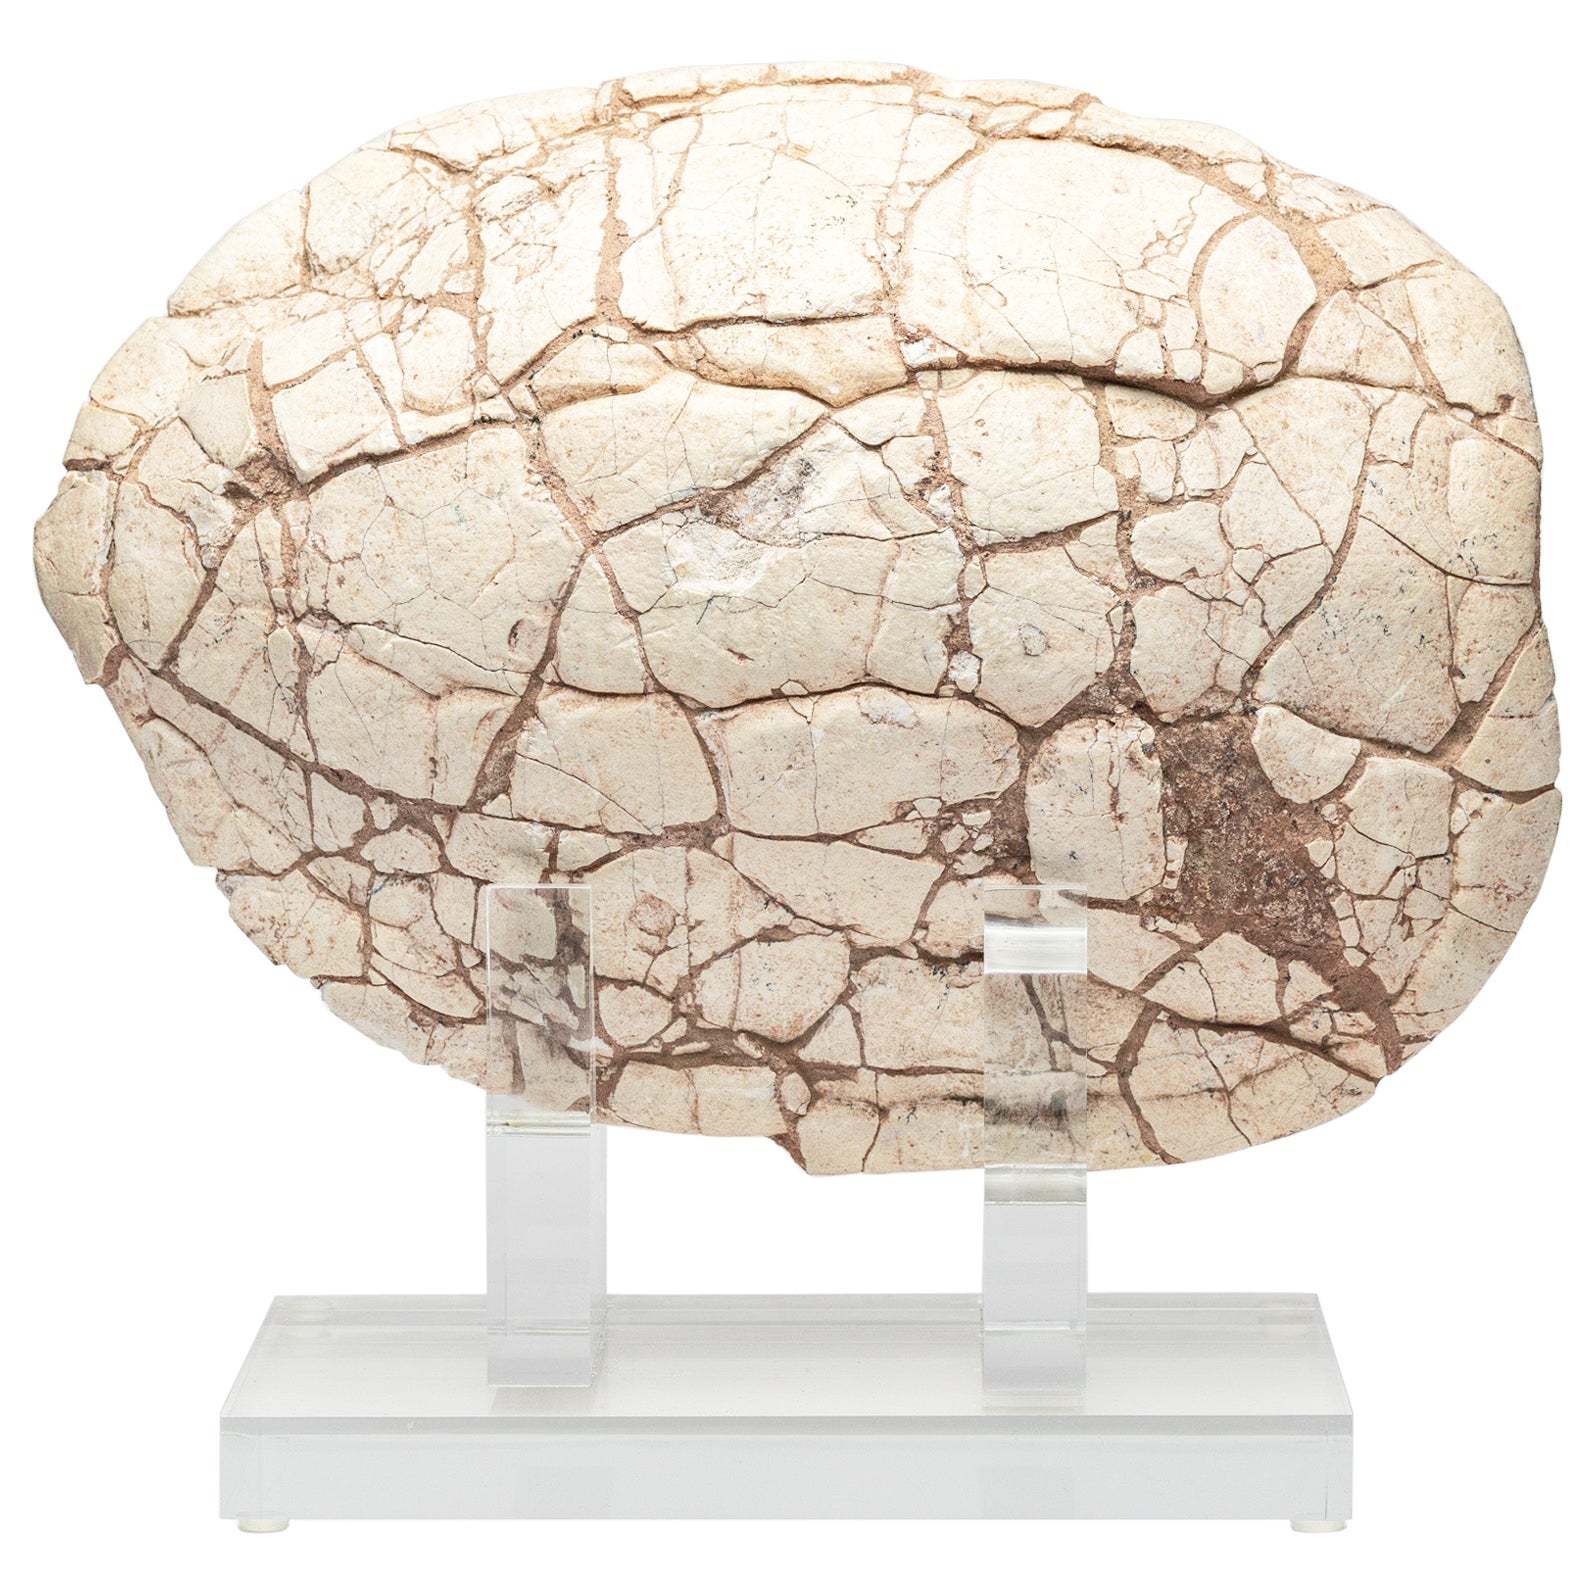 Tortoise Shell fossil  mounted on custom acrylic base